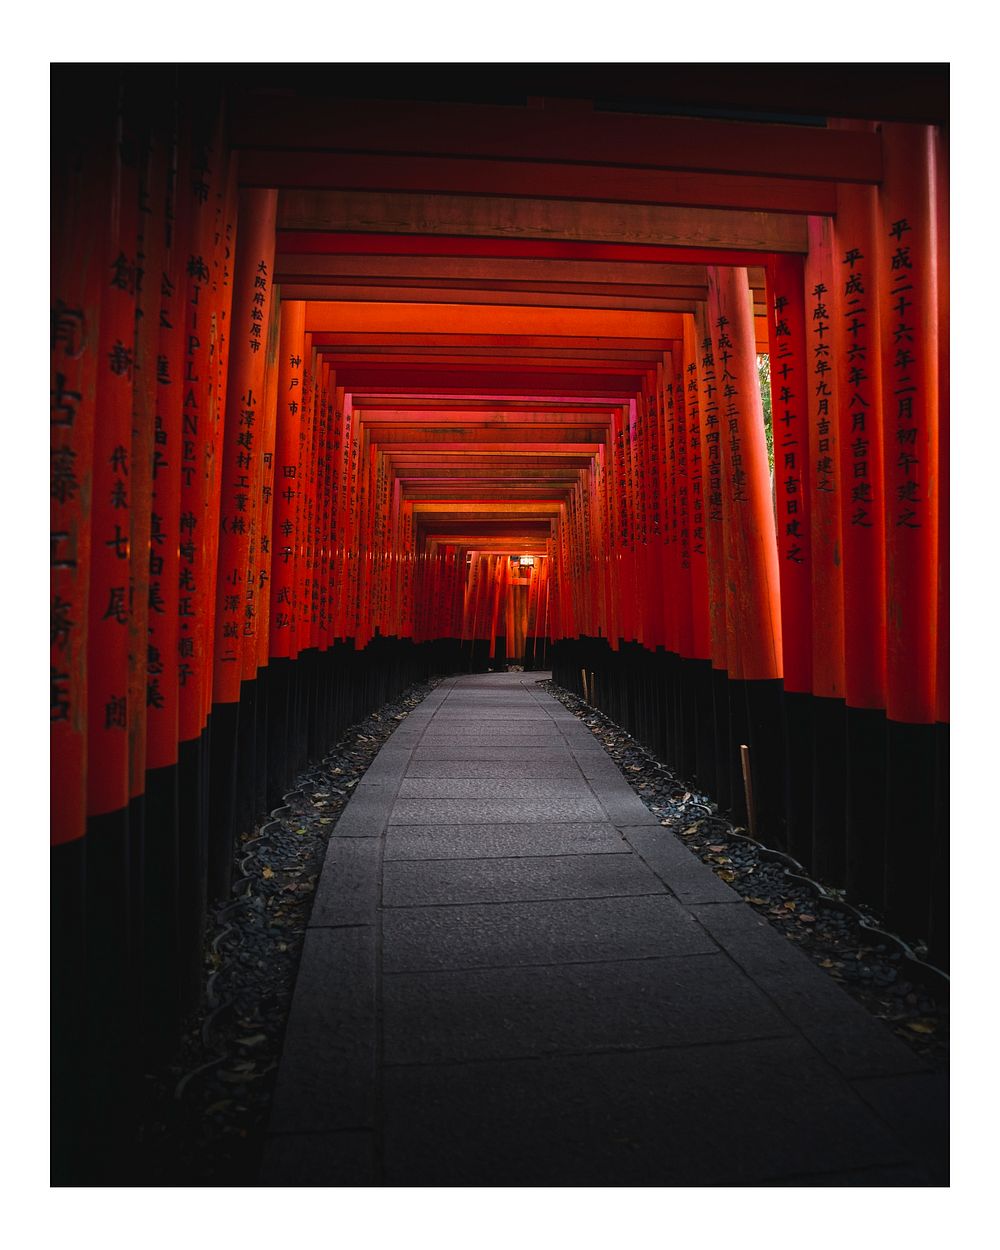 Japanese Torii gate art print poster, wanderlust wall decor, Fushimi Inari Shrine gate in Kyoto, Japan